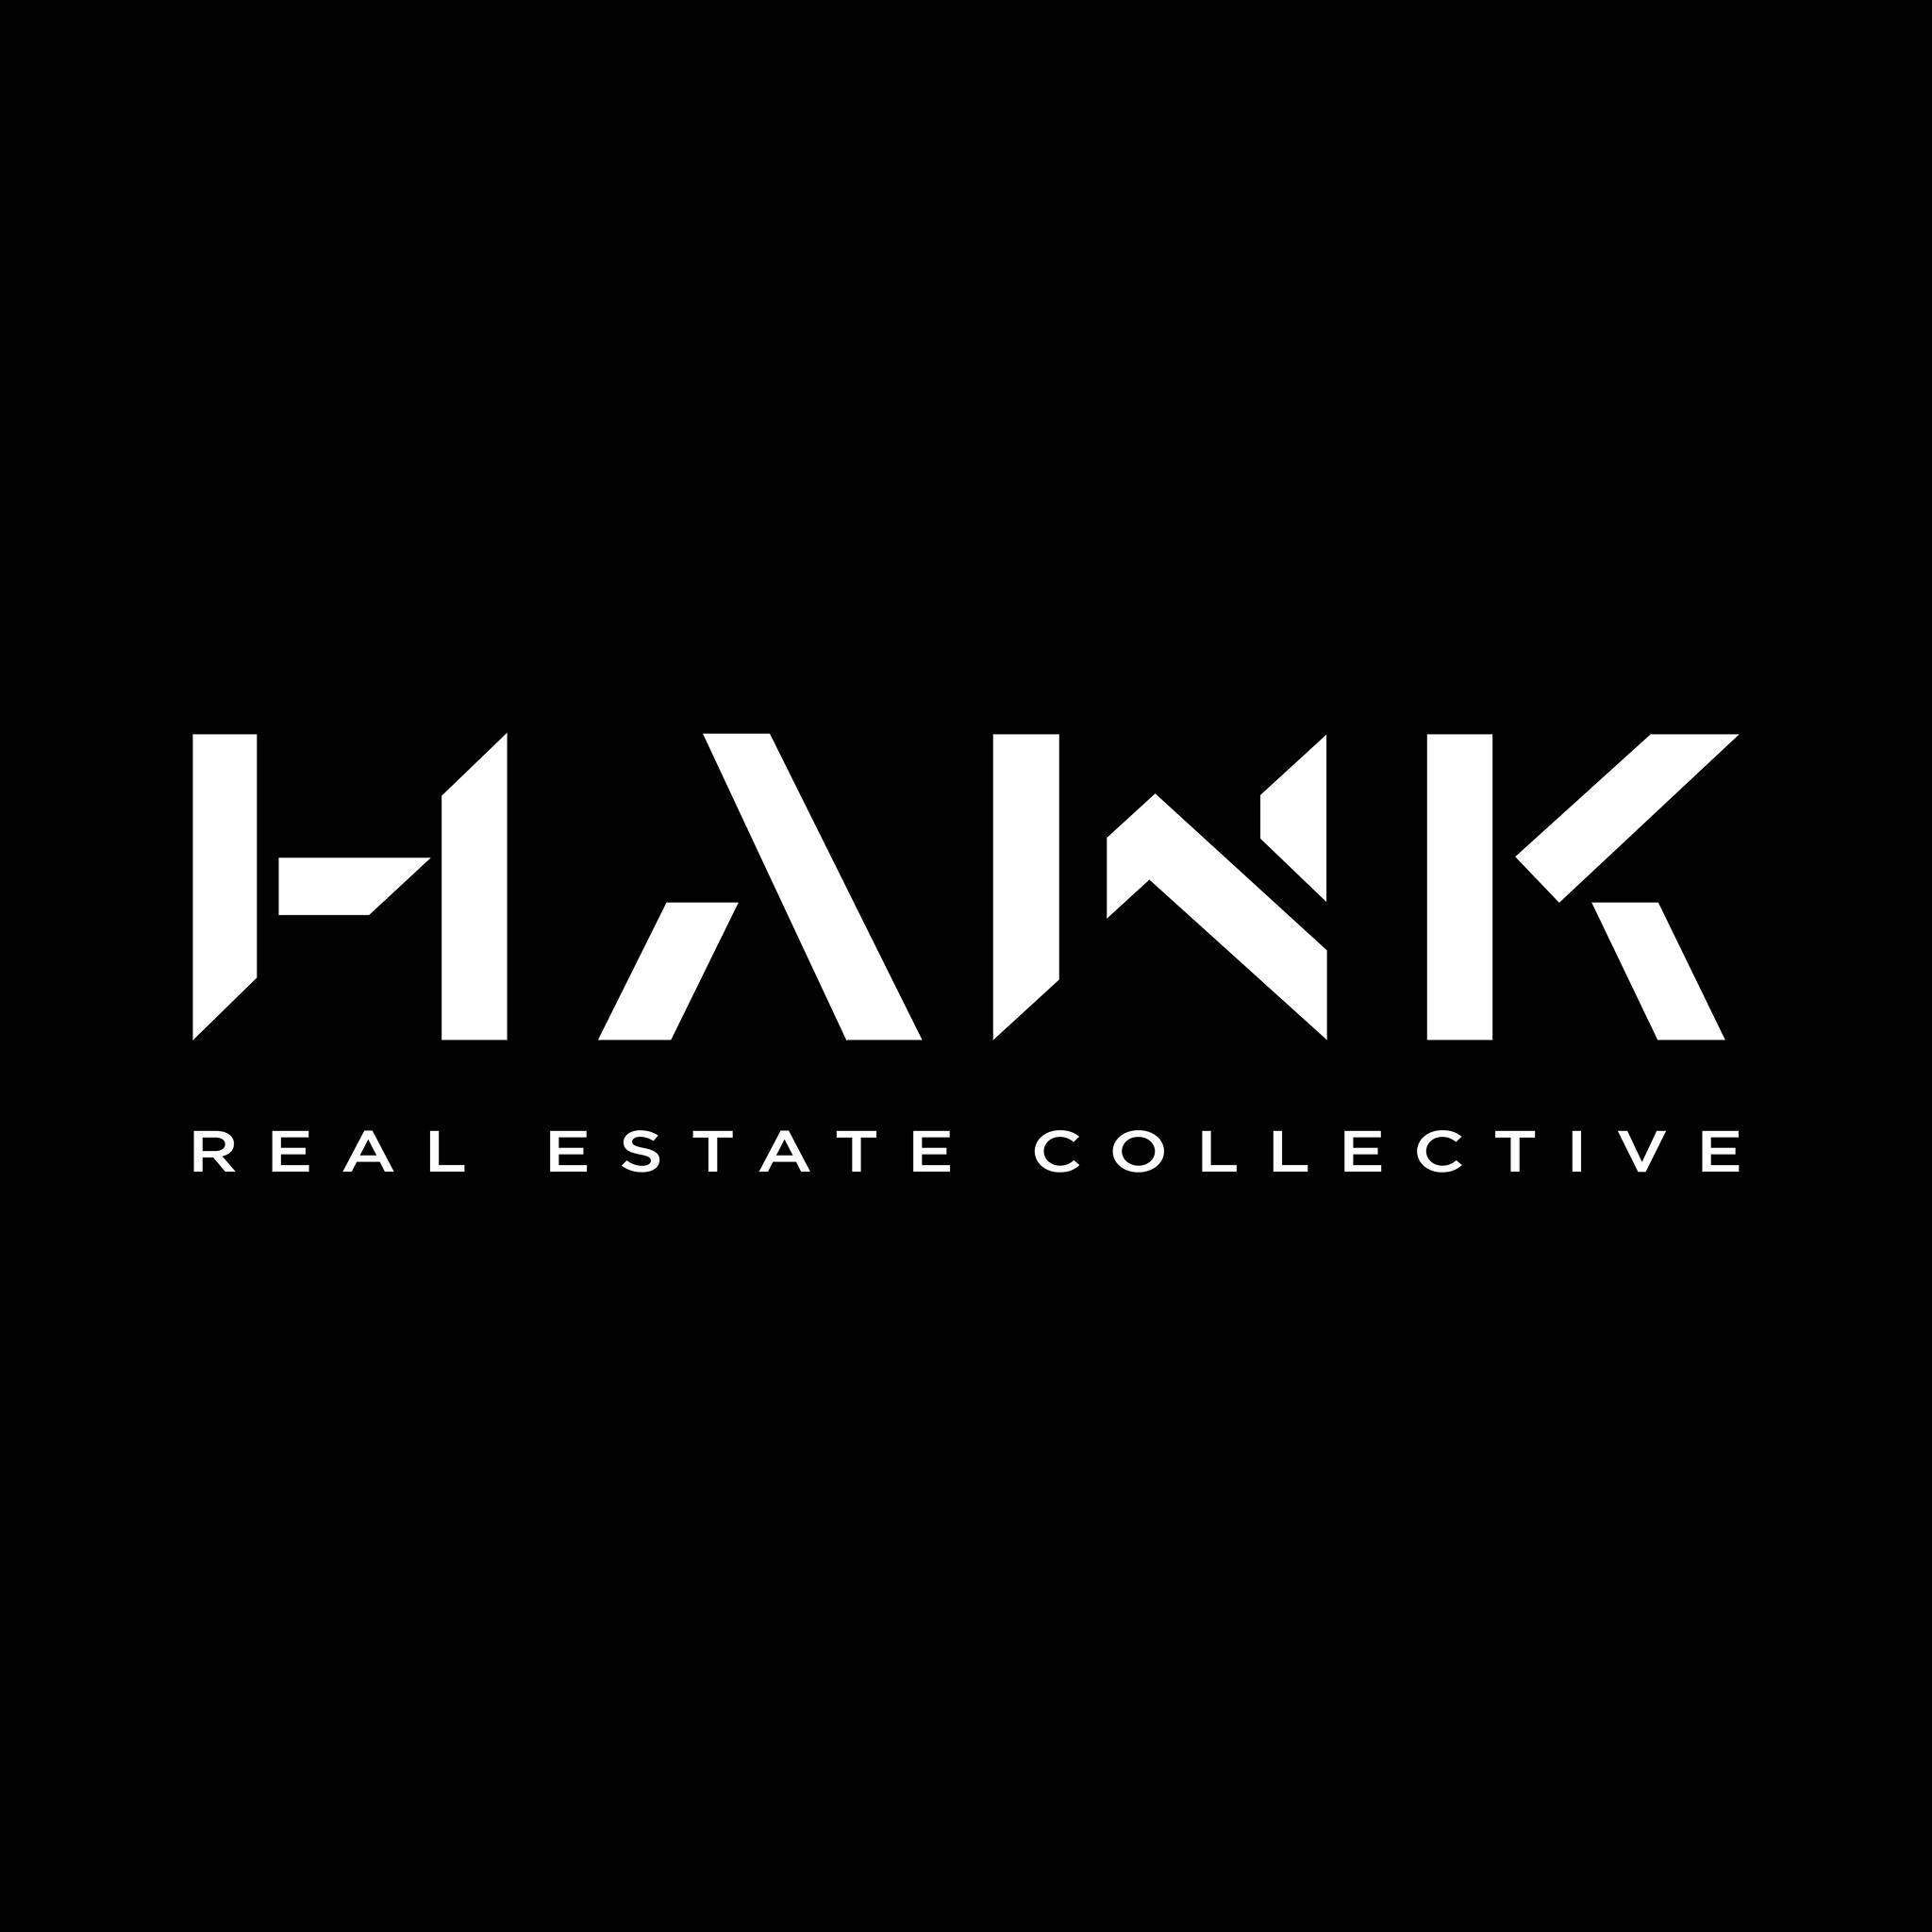 Hawk Real Estate Collective